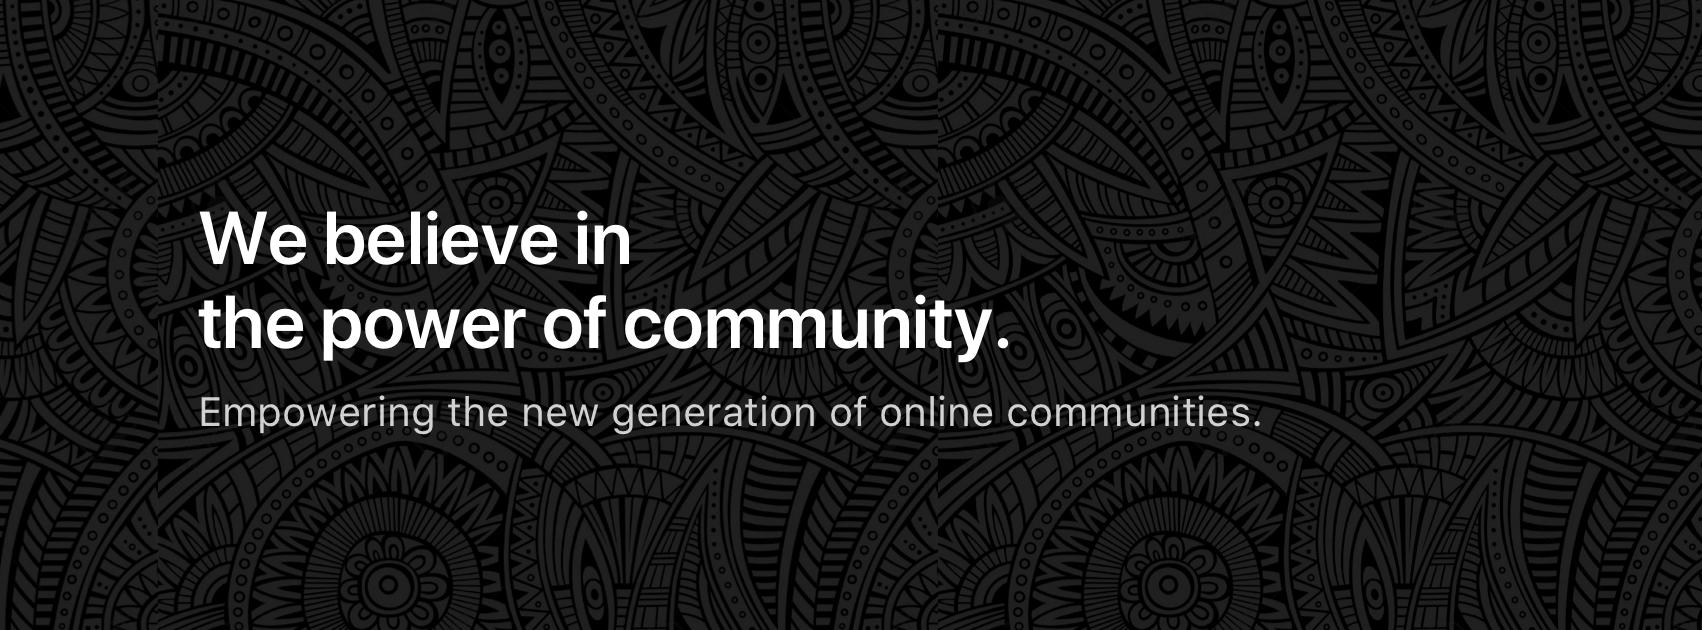 Review Tribe Community Platform: Customisable Community Platform to Create Online Communities - Appvizer